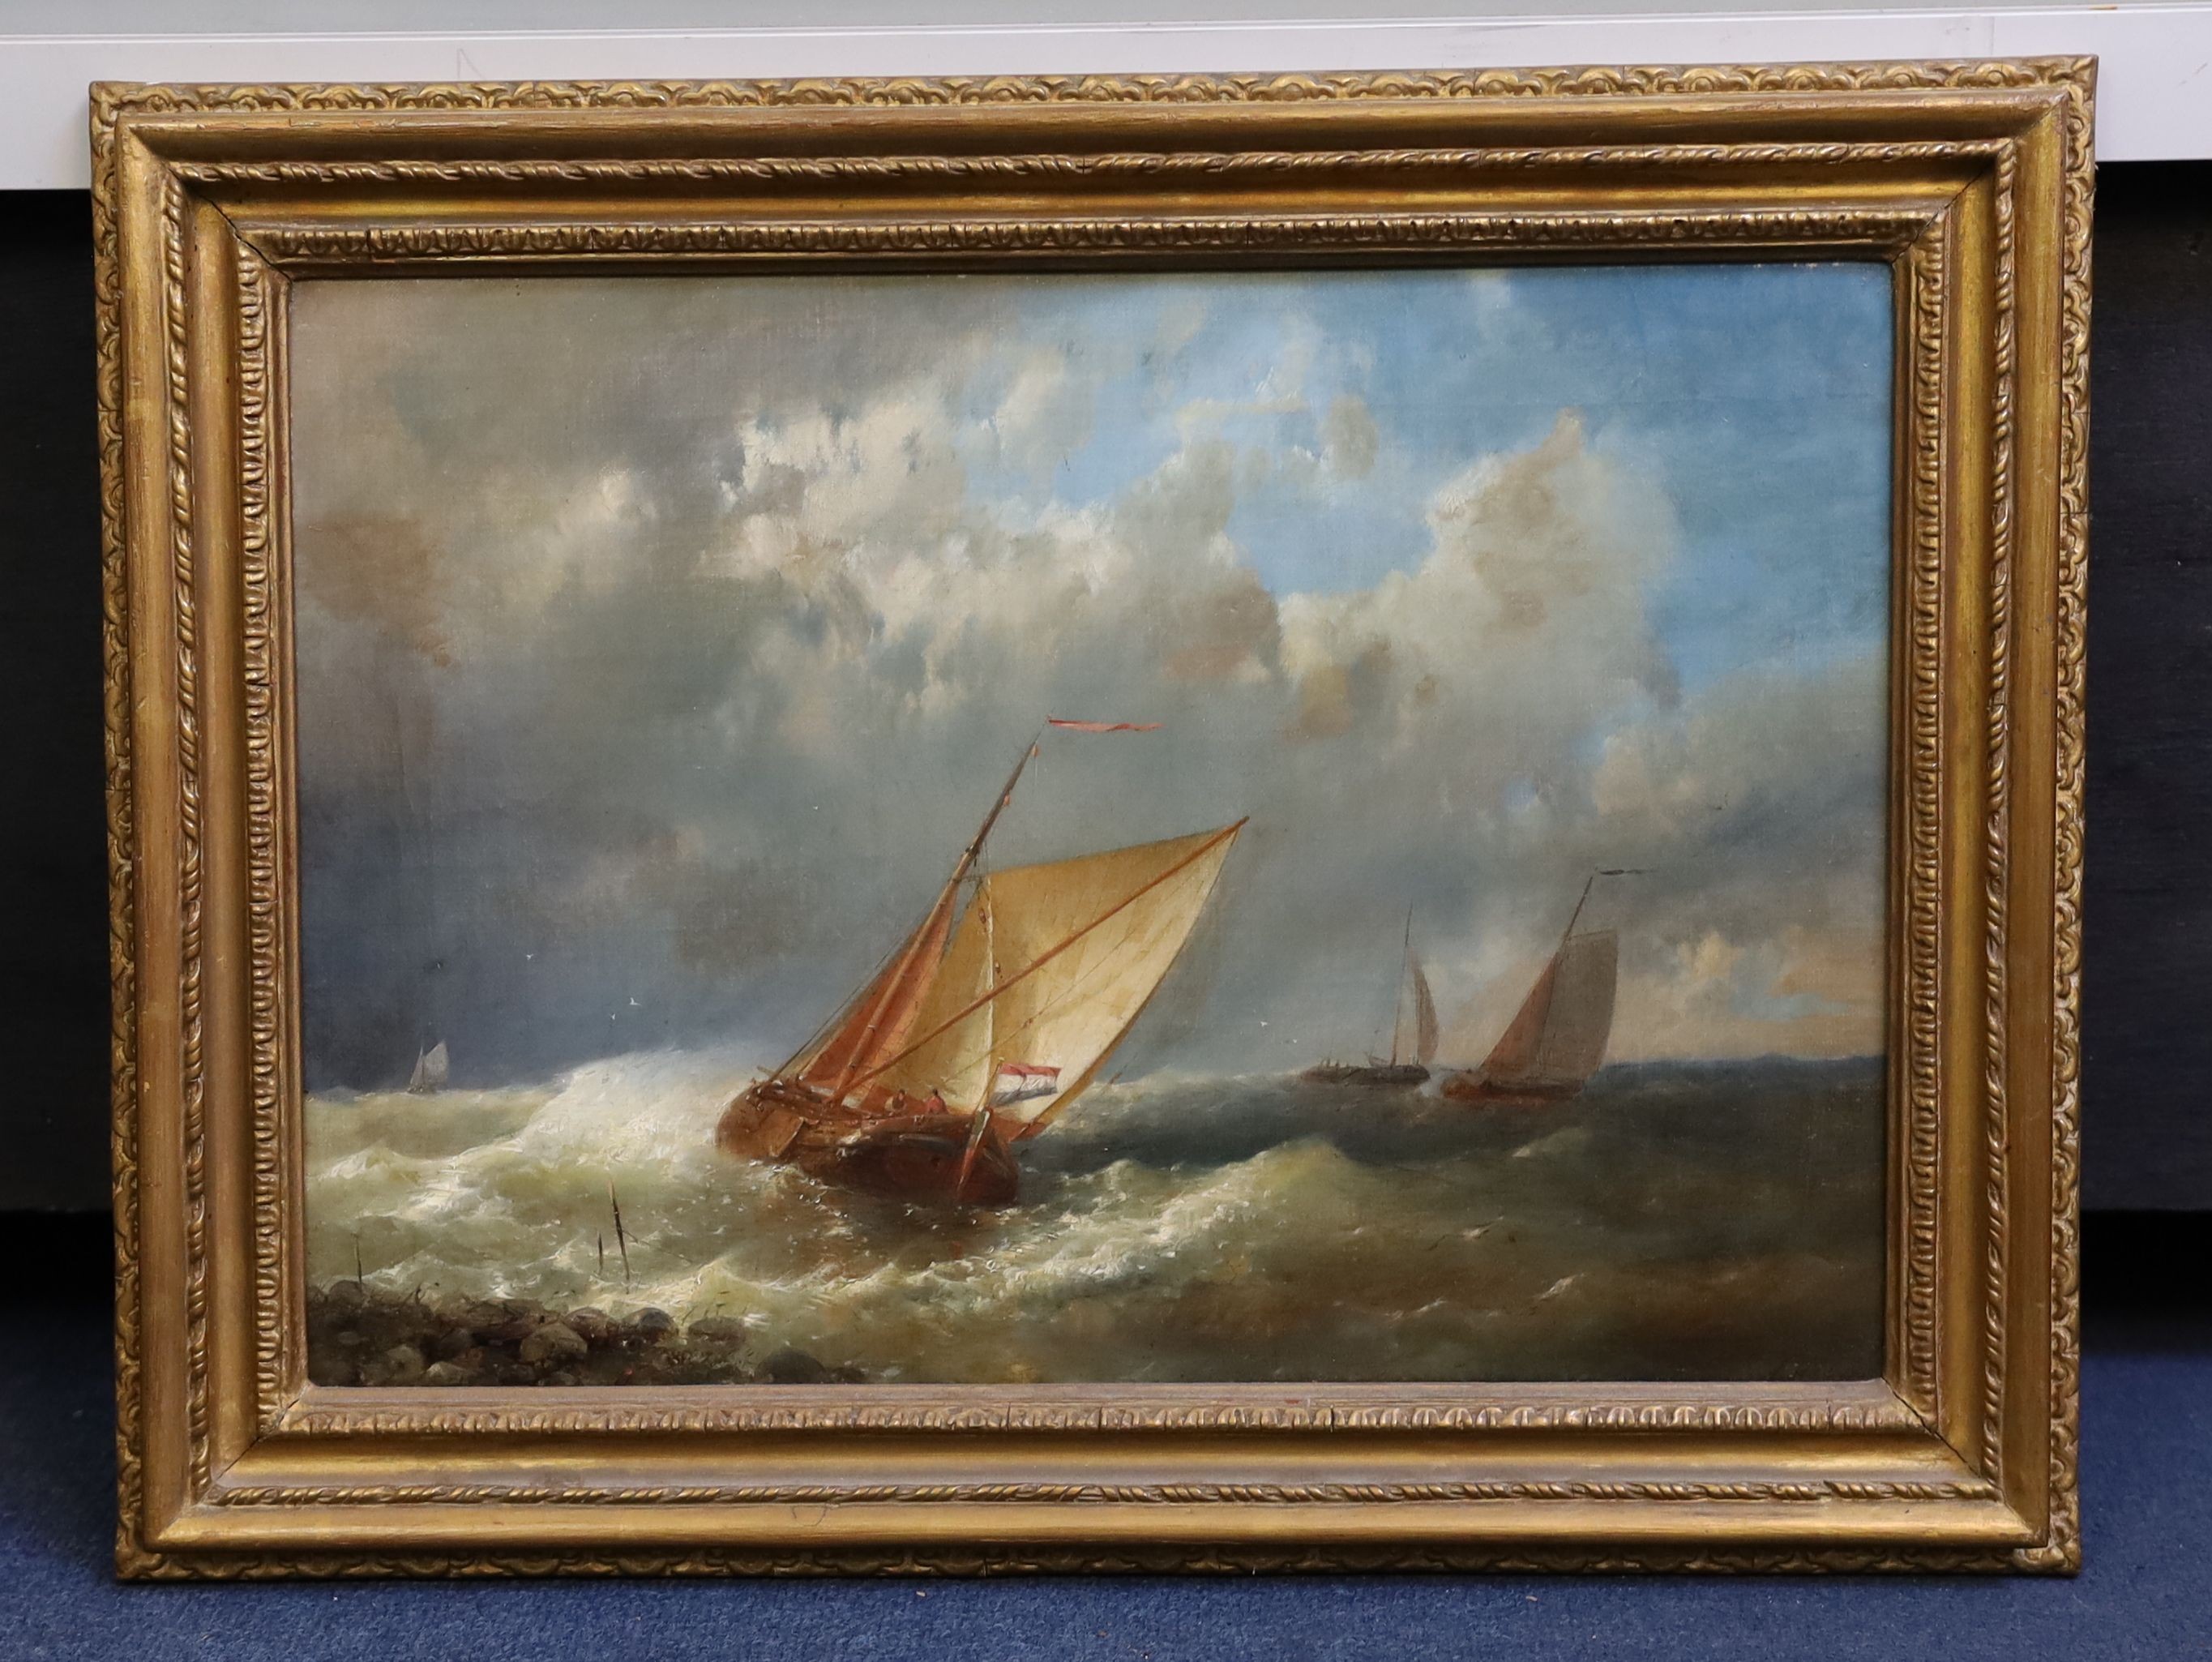 Abraham Hulk (Dutch, 1813-1897), Dutch vessels off the coast, oil on canvas, 30 x 43cm